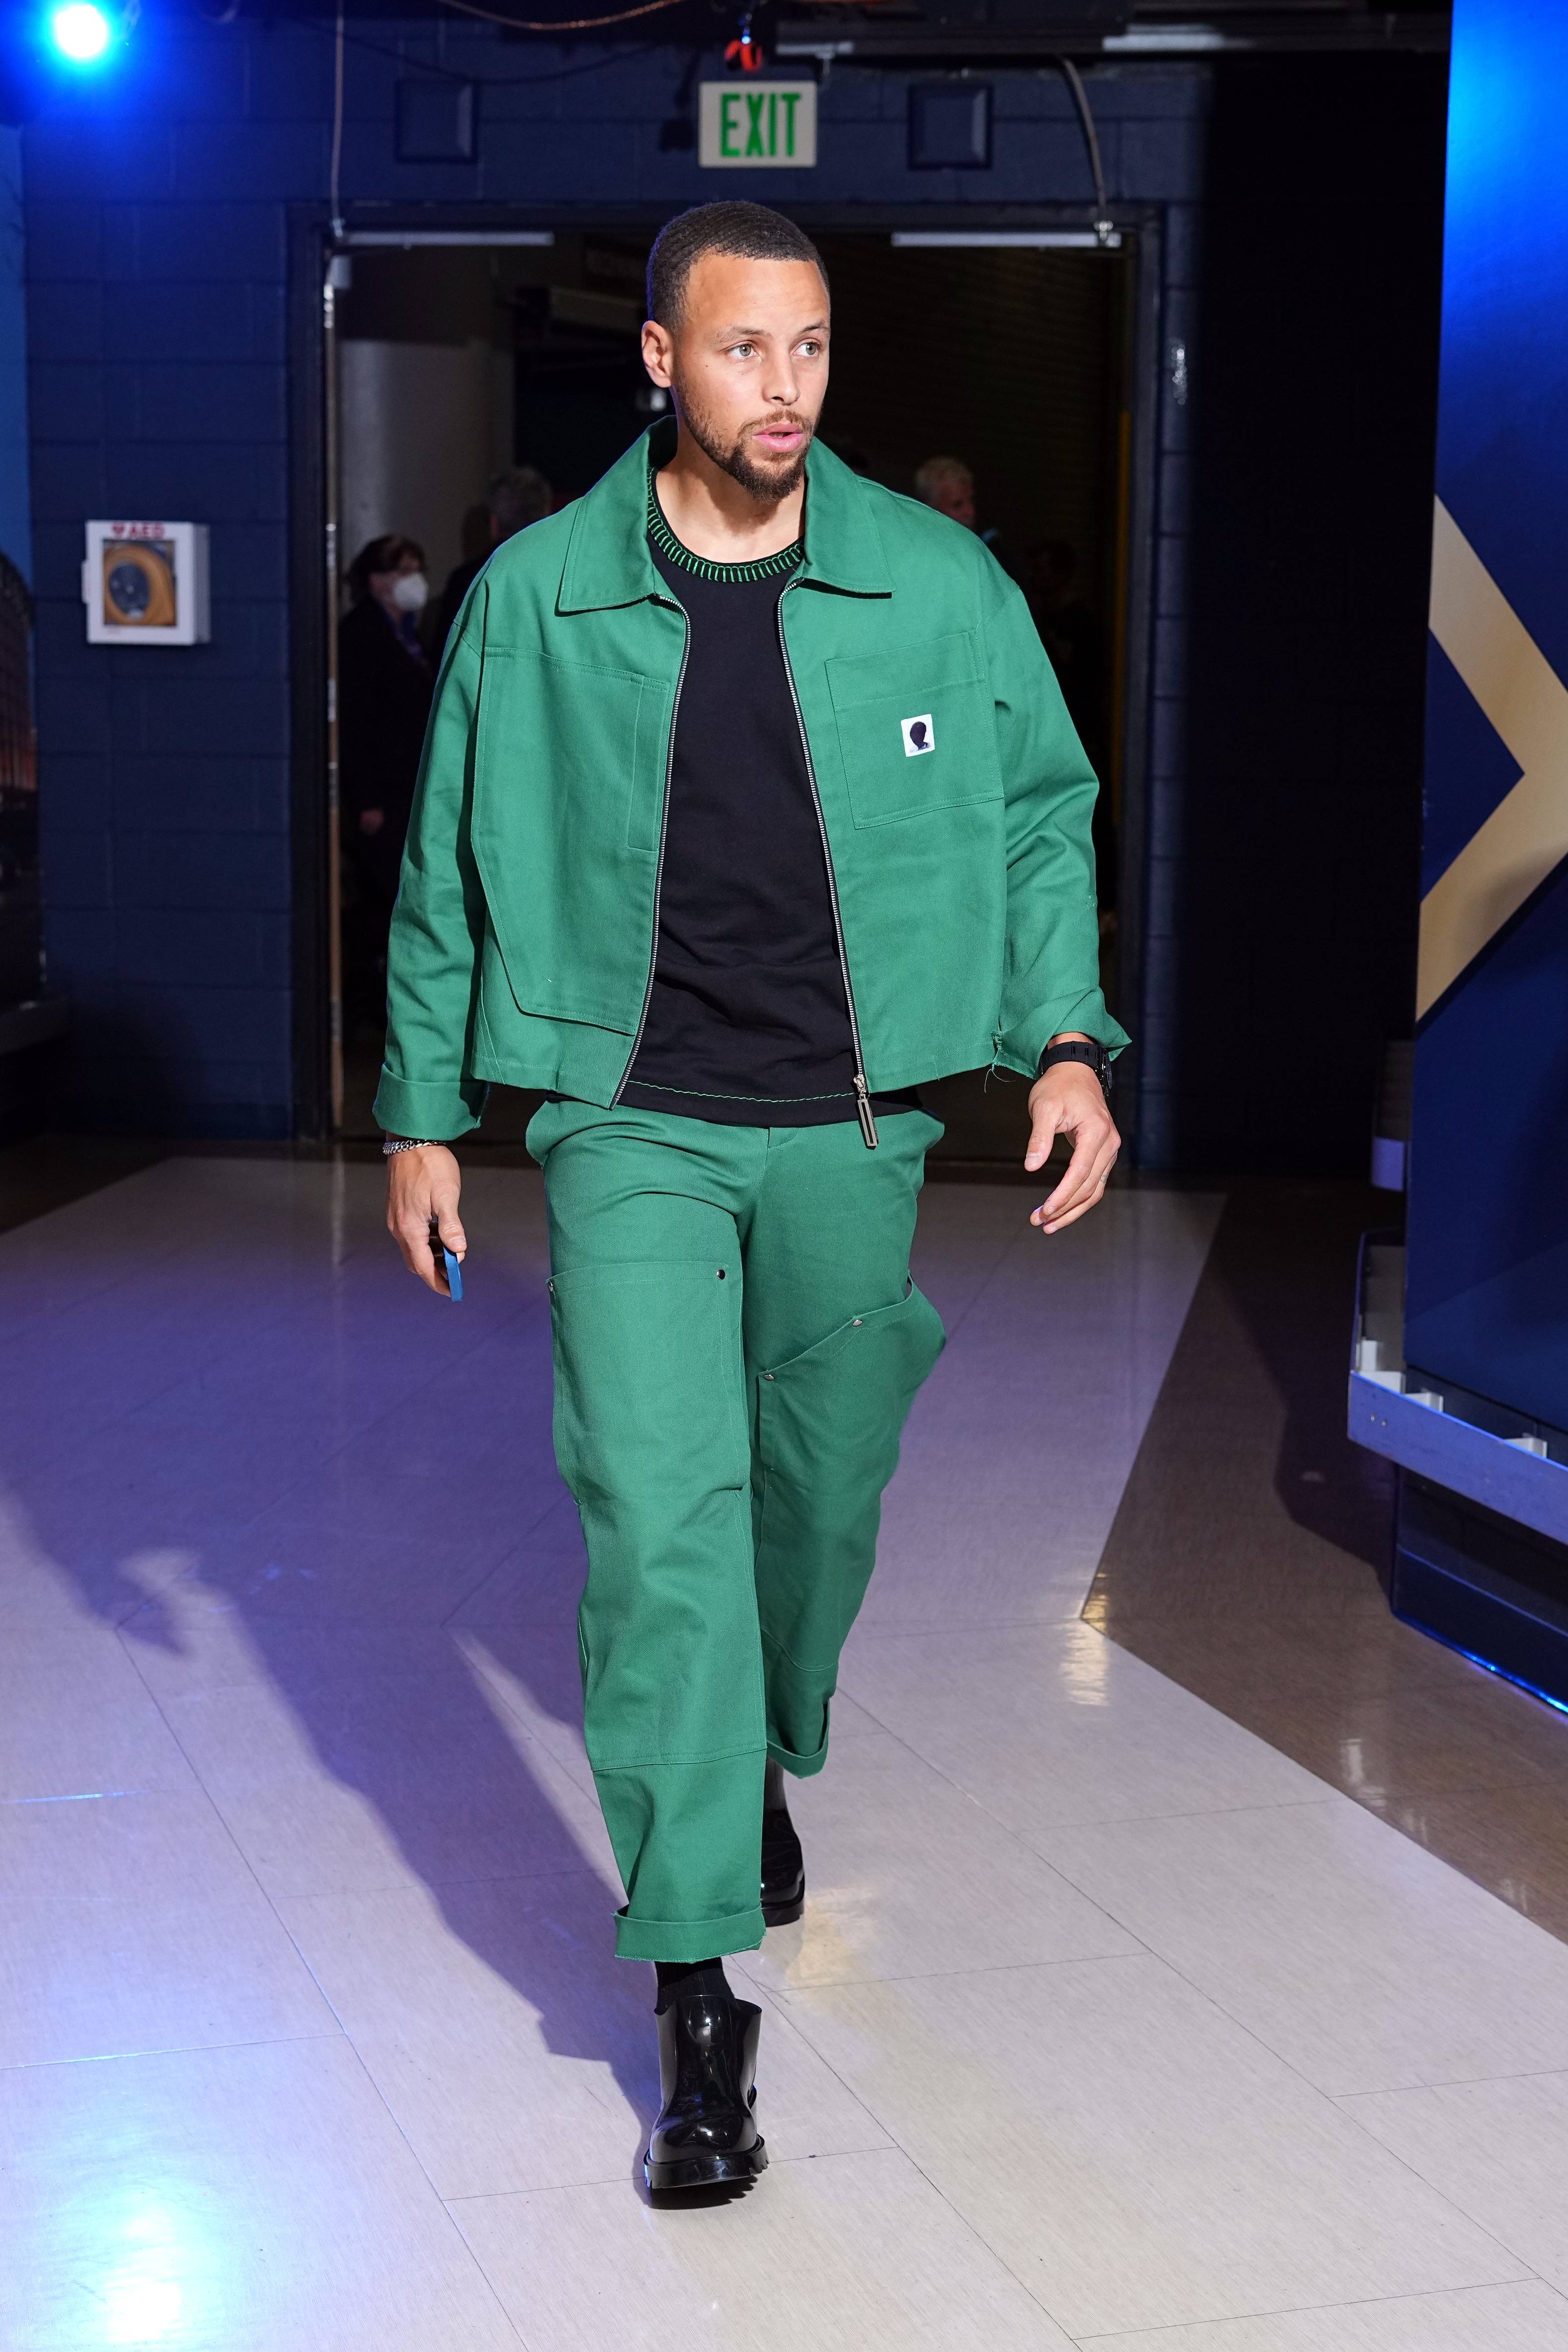 NBA Fashion  Nba fashion, Best dressed man, Stephen curry